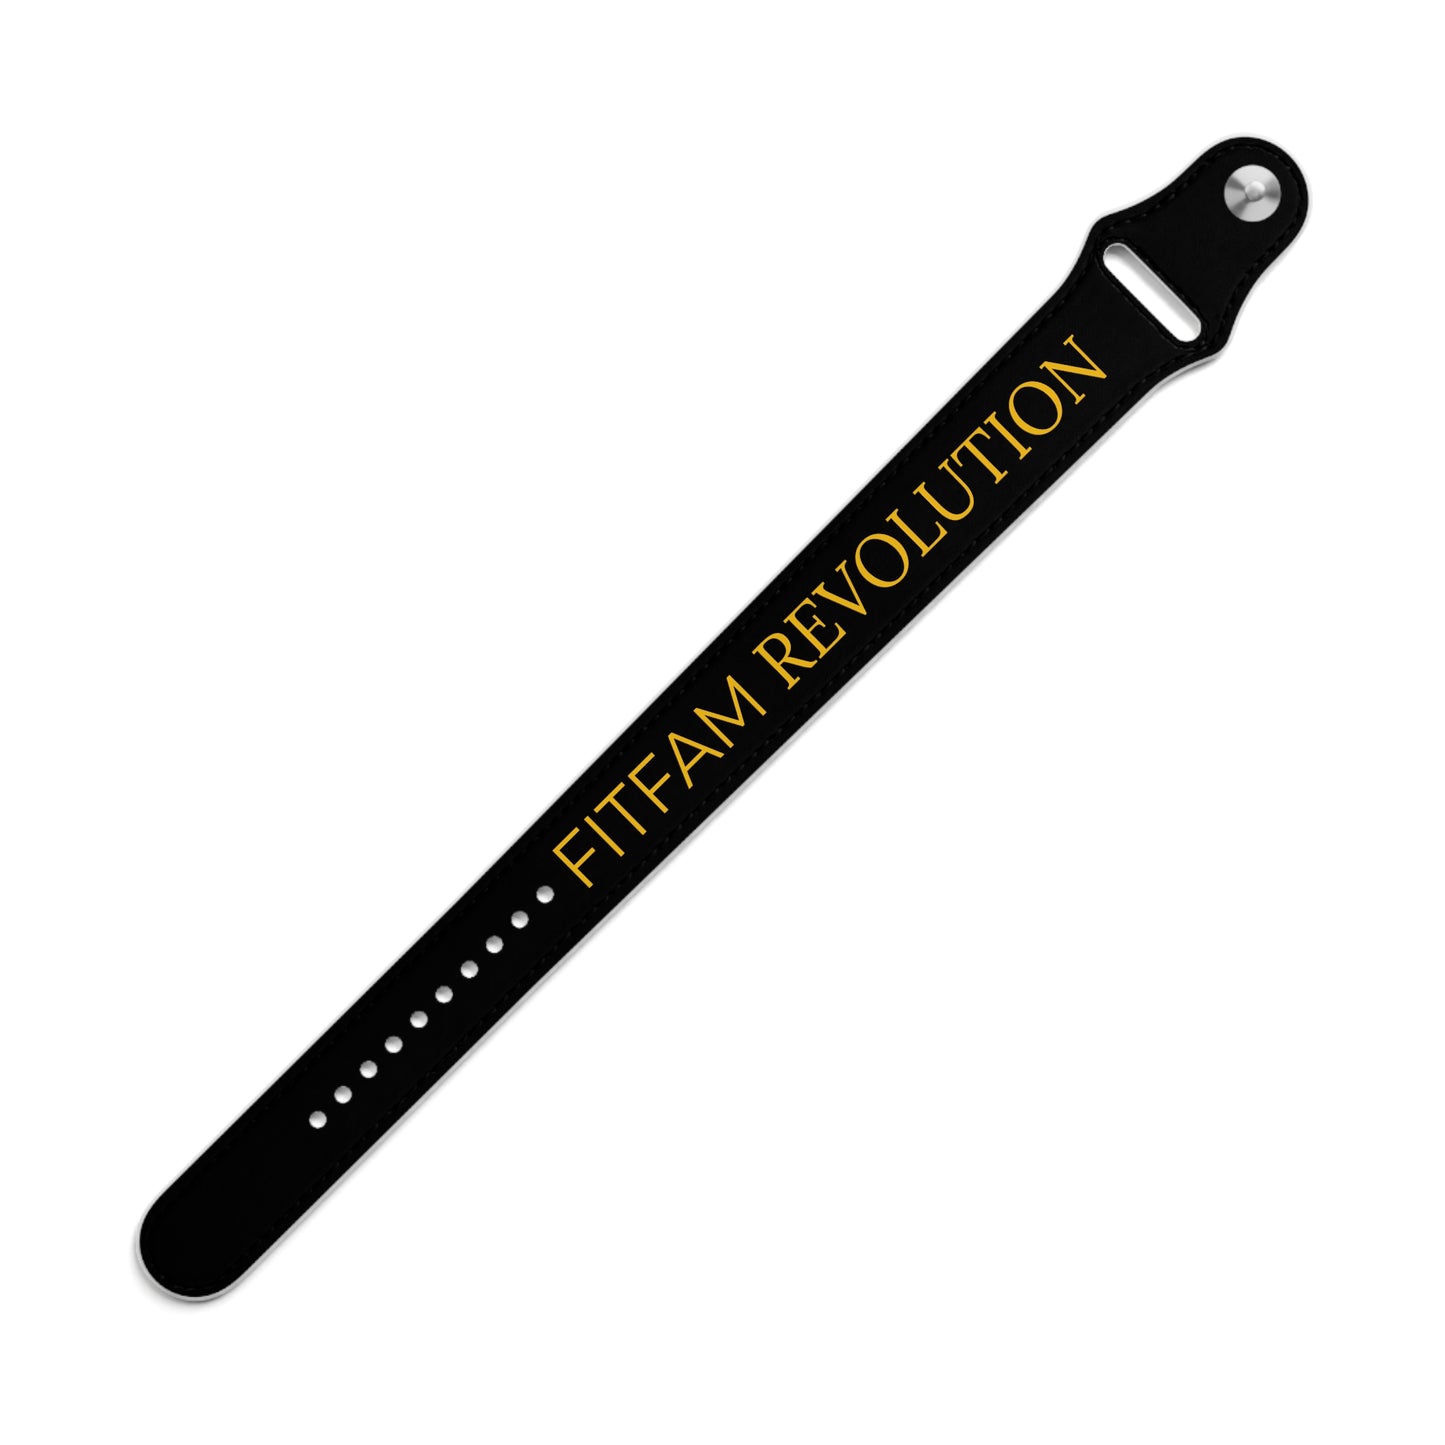 FITFAM Black & Gold Wristband